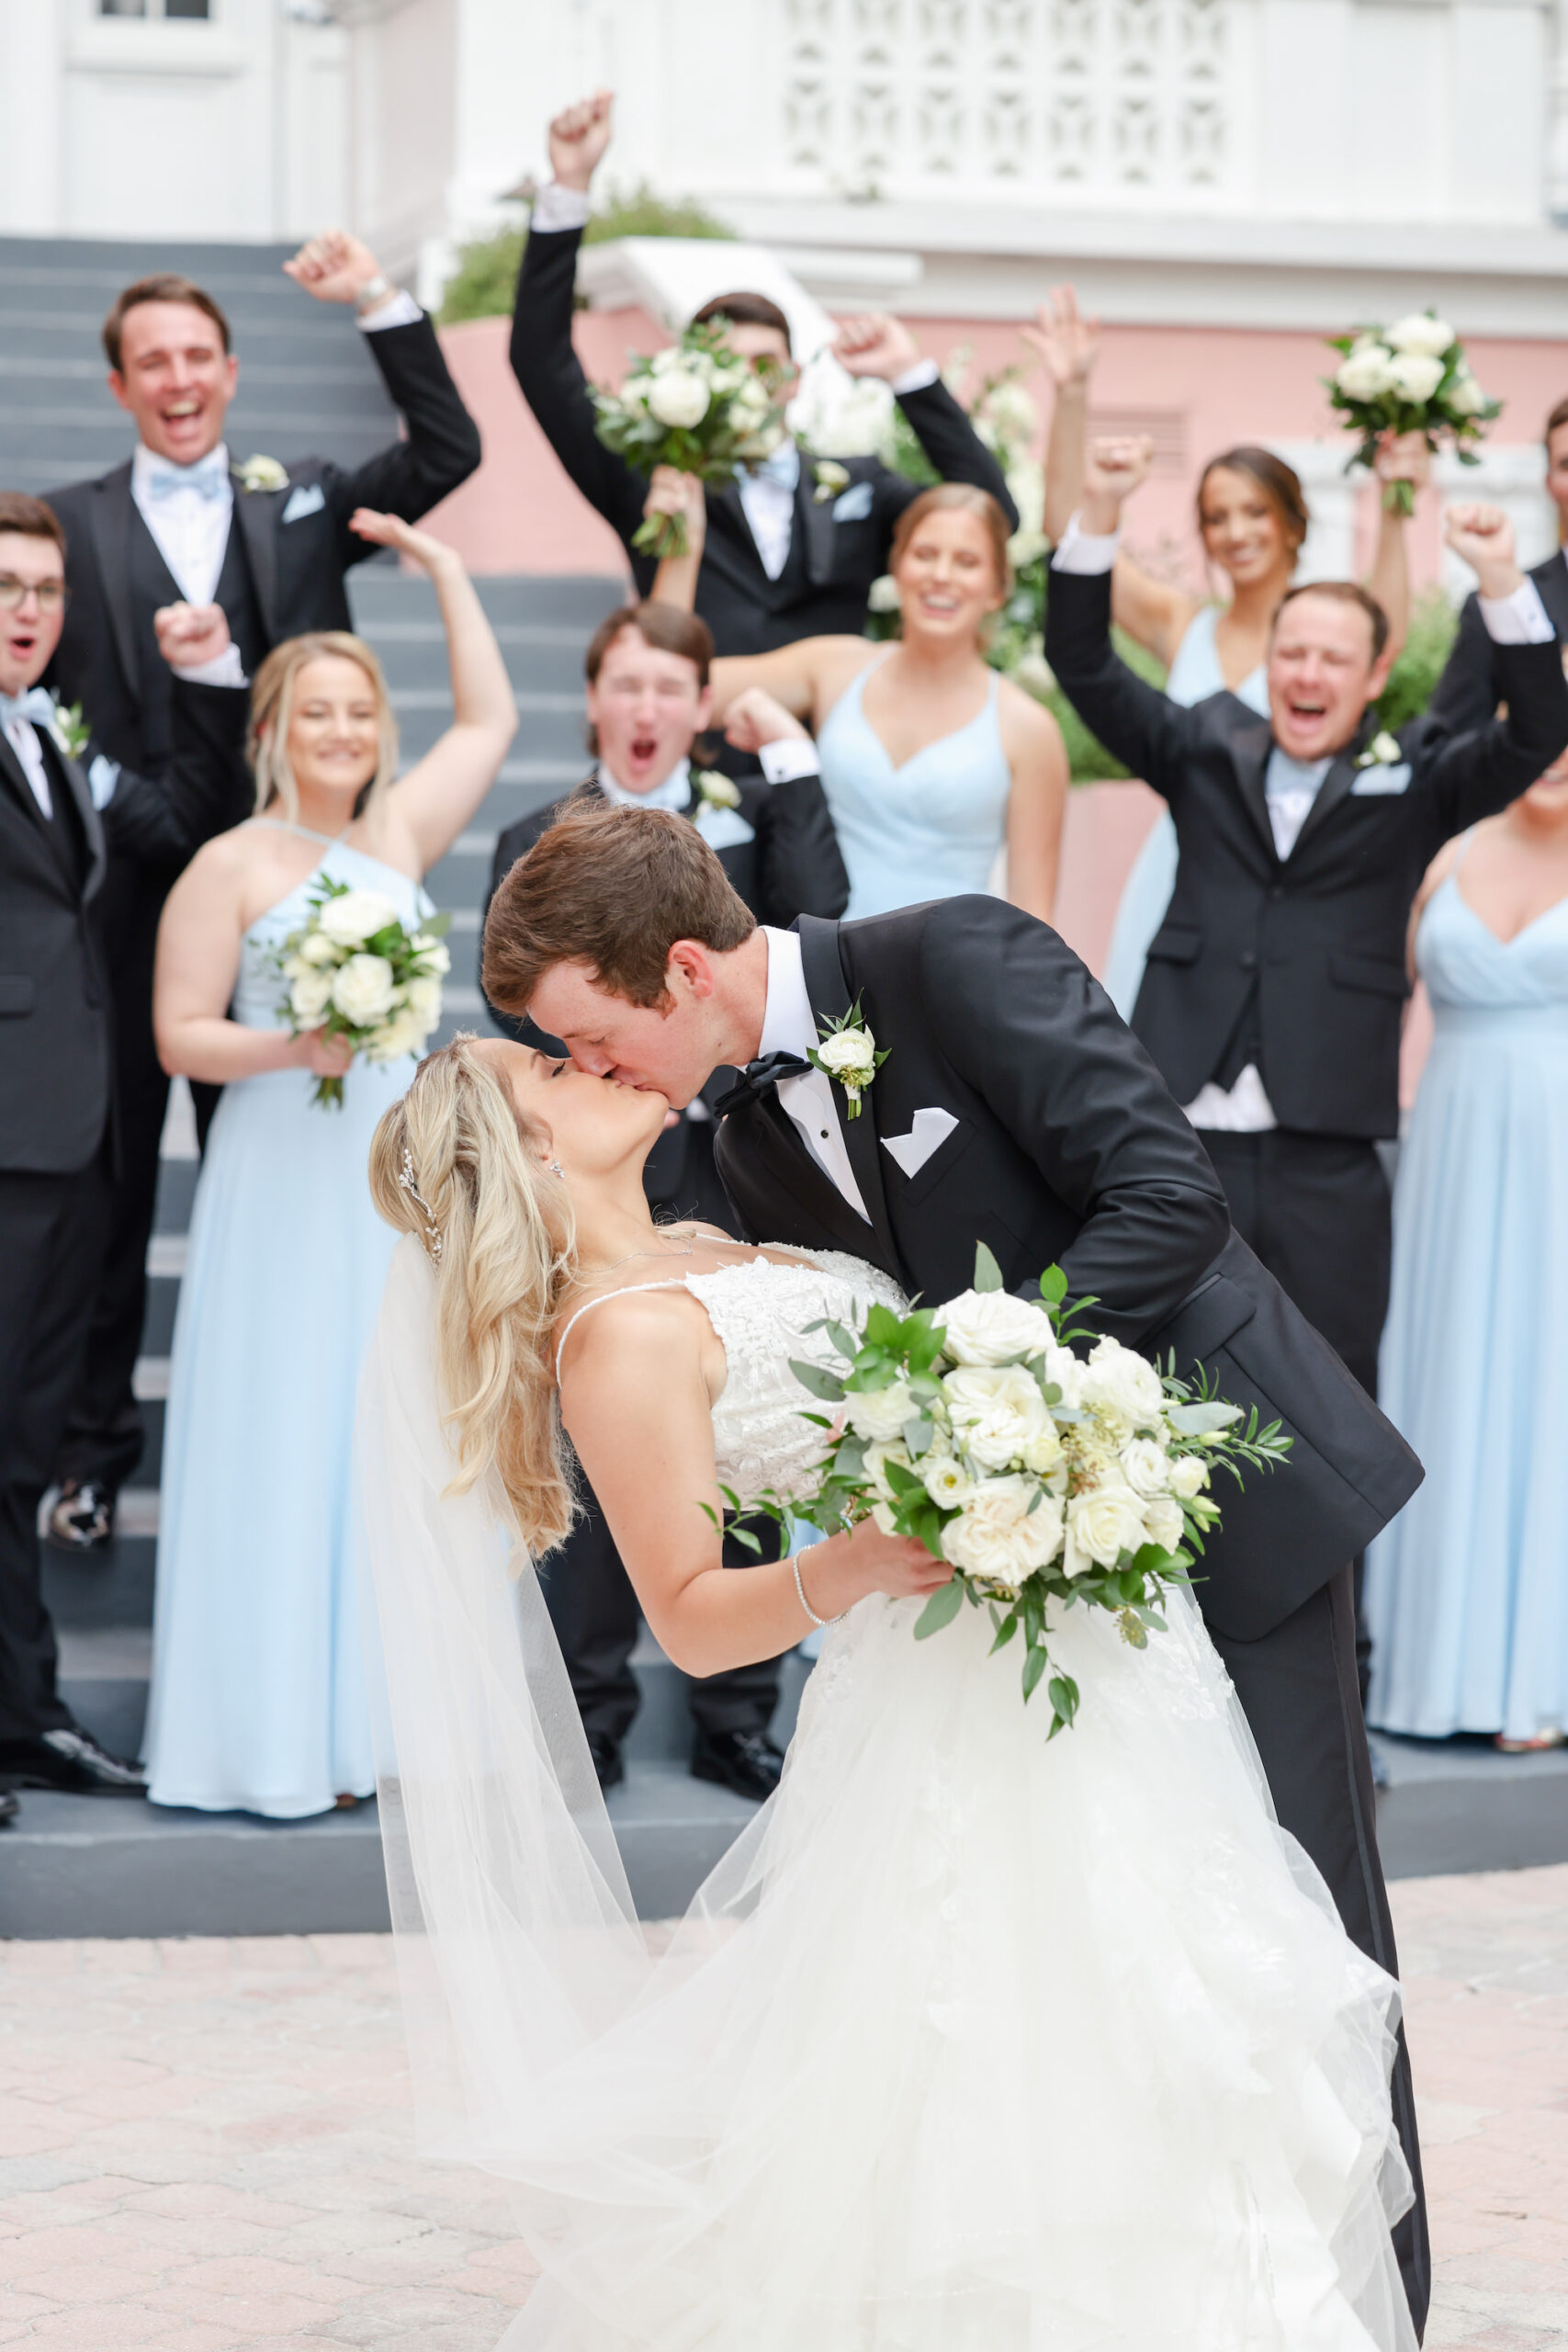 Bride and Groom Romantic Kiss | St Petersburg Wedding Photographer Lifelong Photography